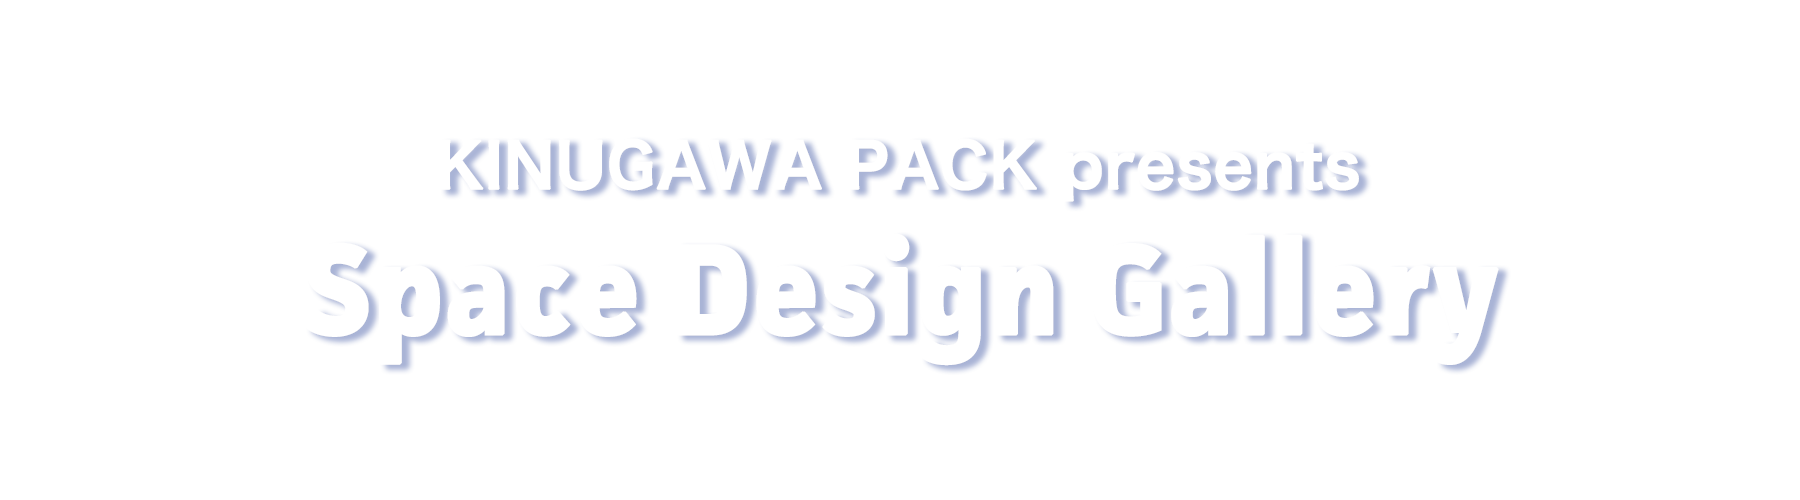 KINUGAWA PACK Space Design Gallery